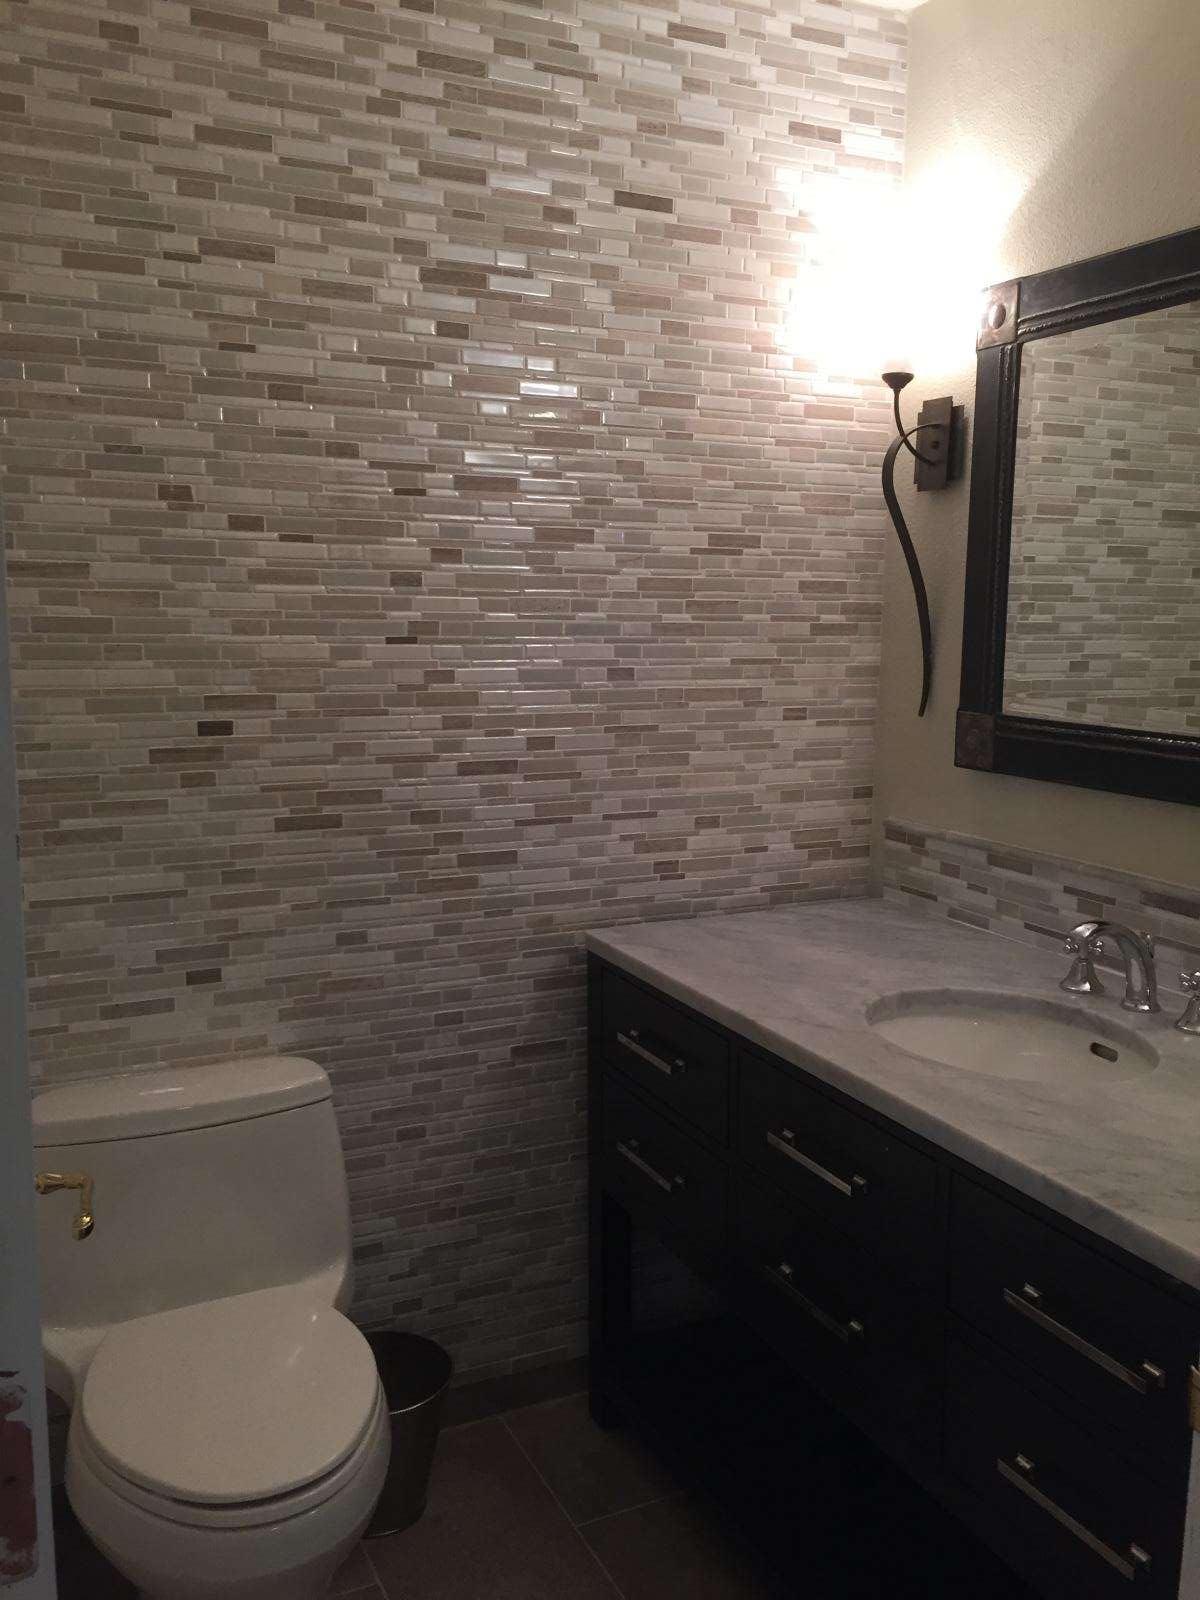 refinished tile in bathroom